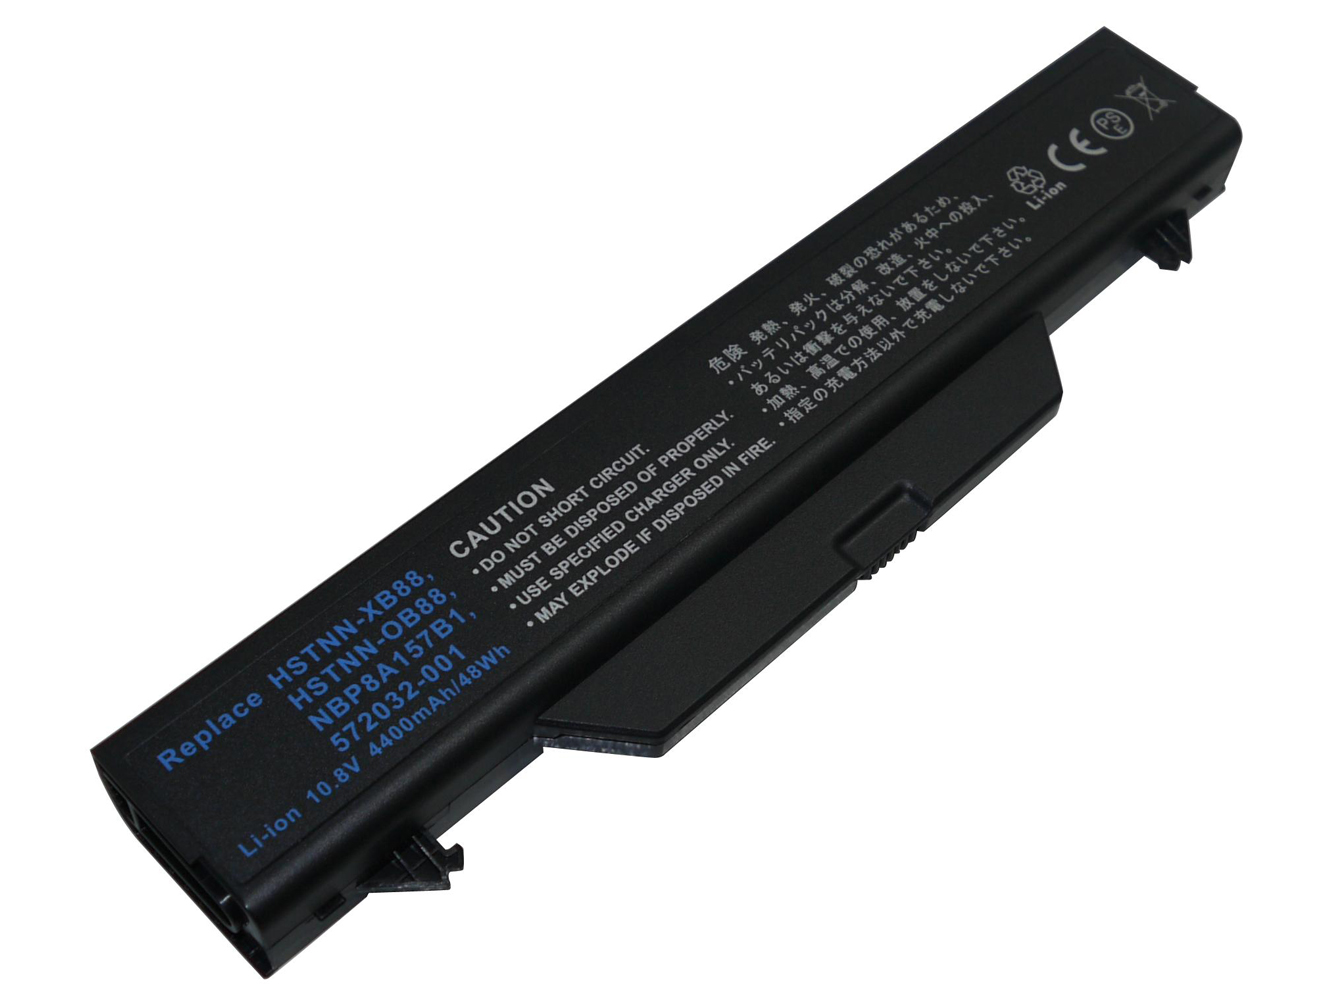 Hp 572032-001, Hstnn-ob88 Laptop Batteries For Hp Probook 4510s, Hp Probook 4510s/ct replacement